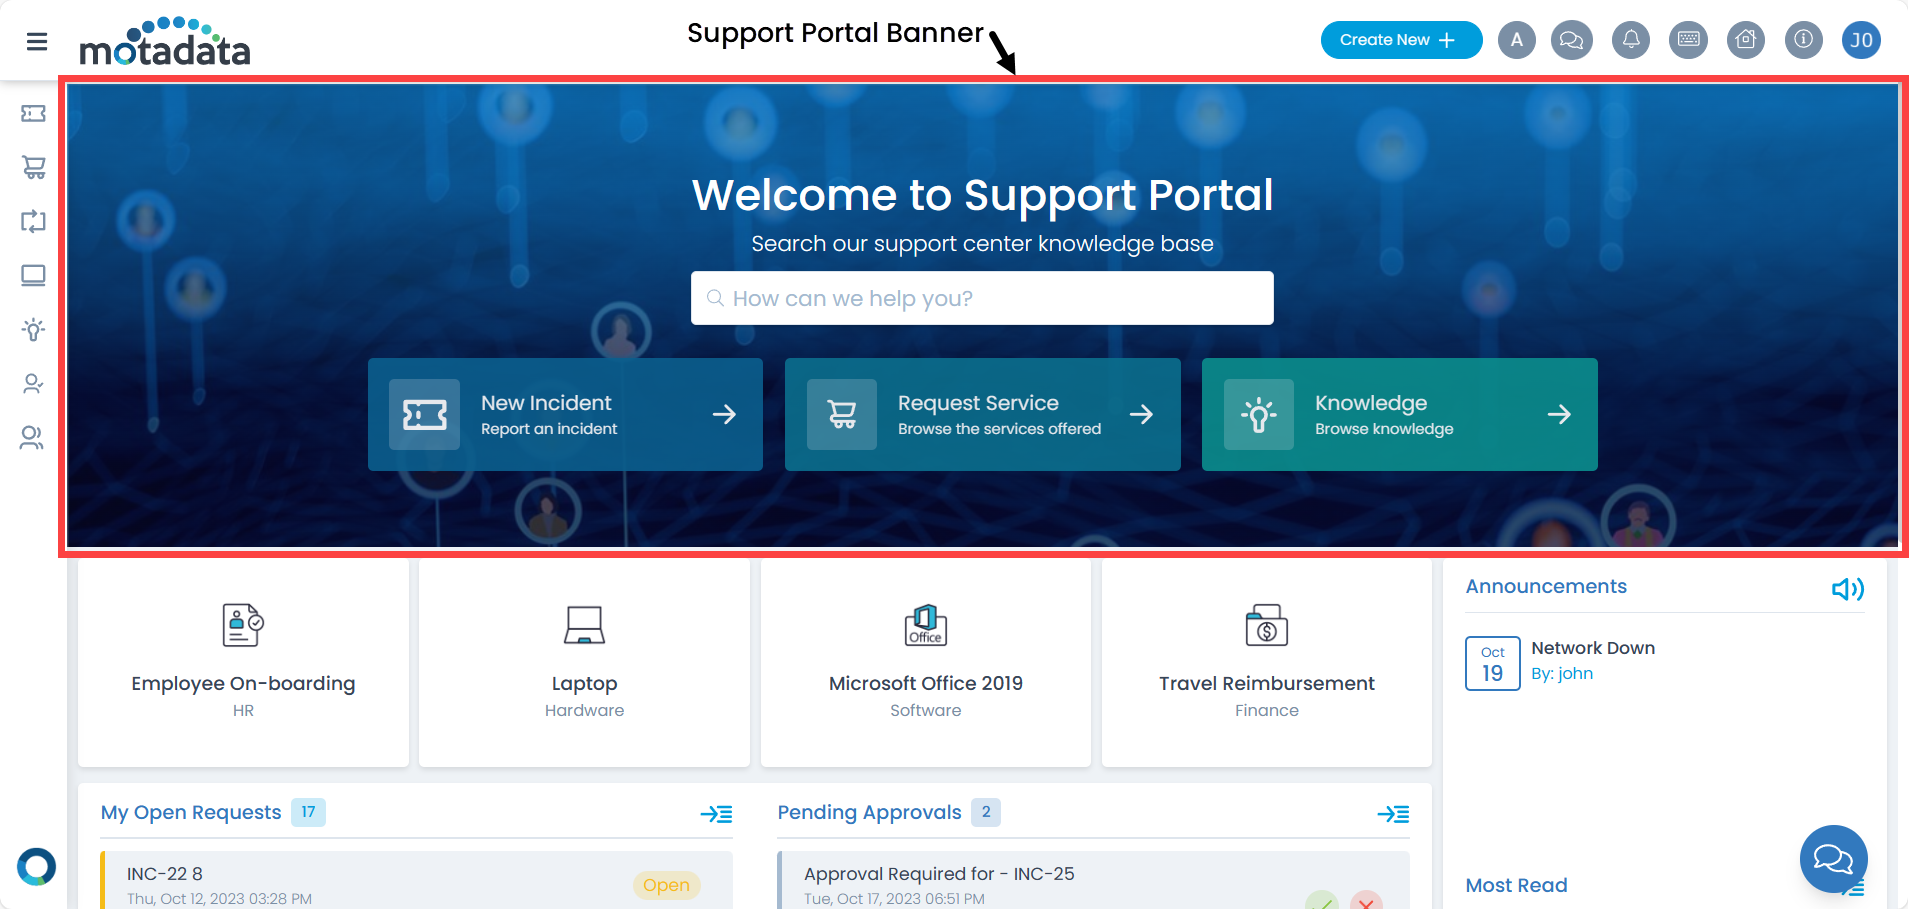 Support Portal Banner Image